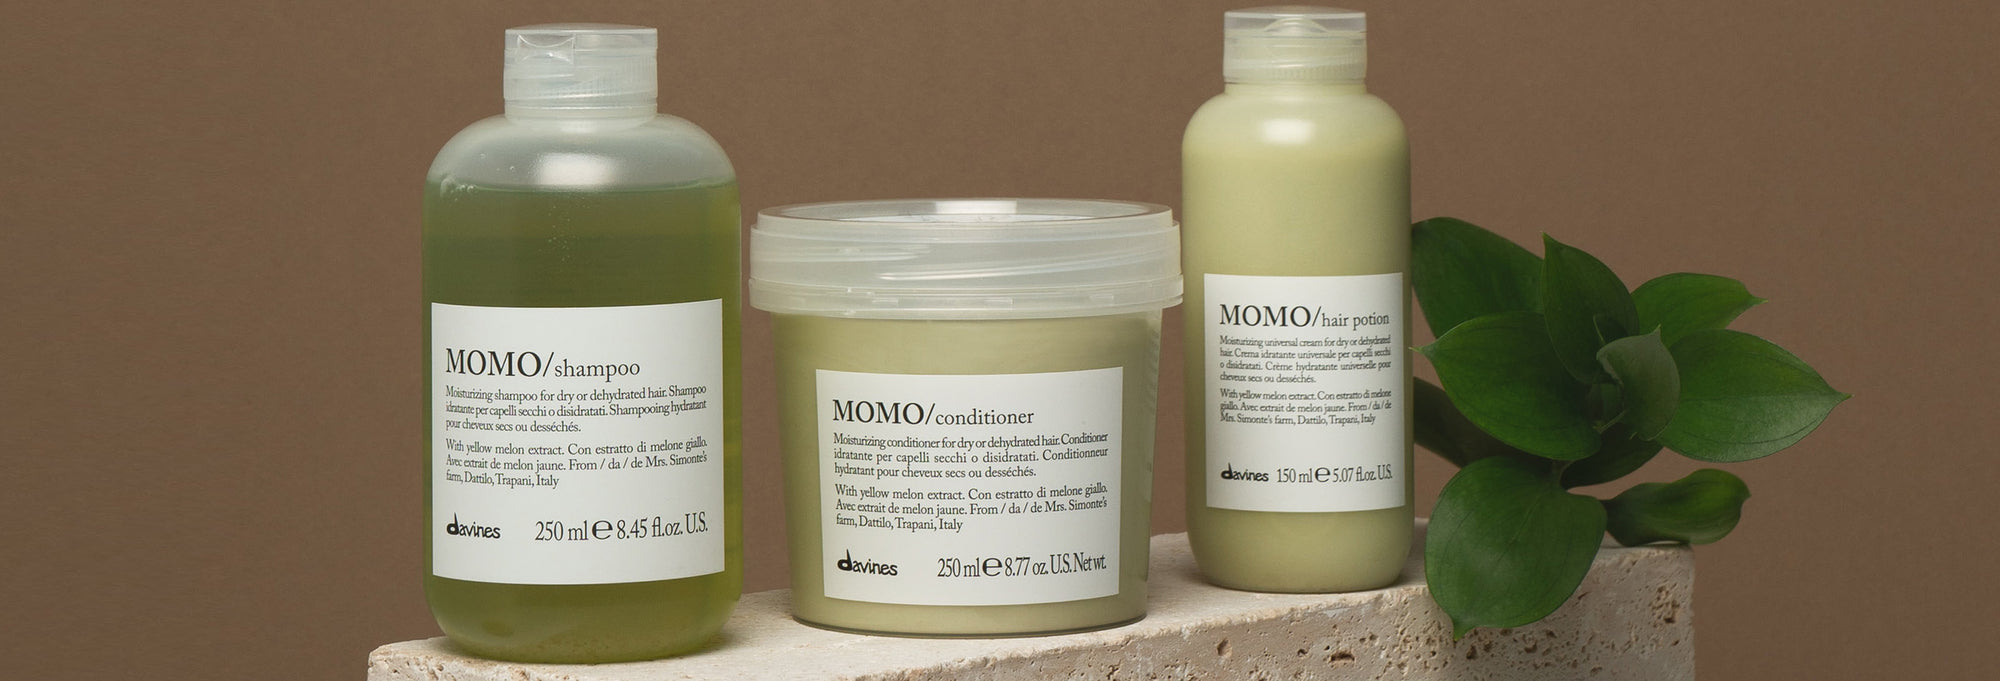 MOMO Moisturising Hair Products